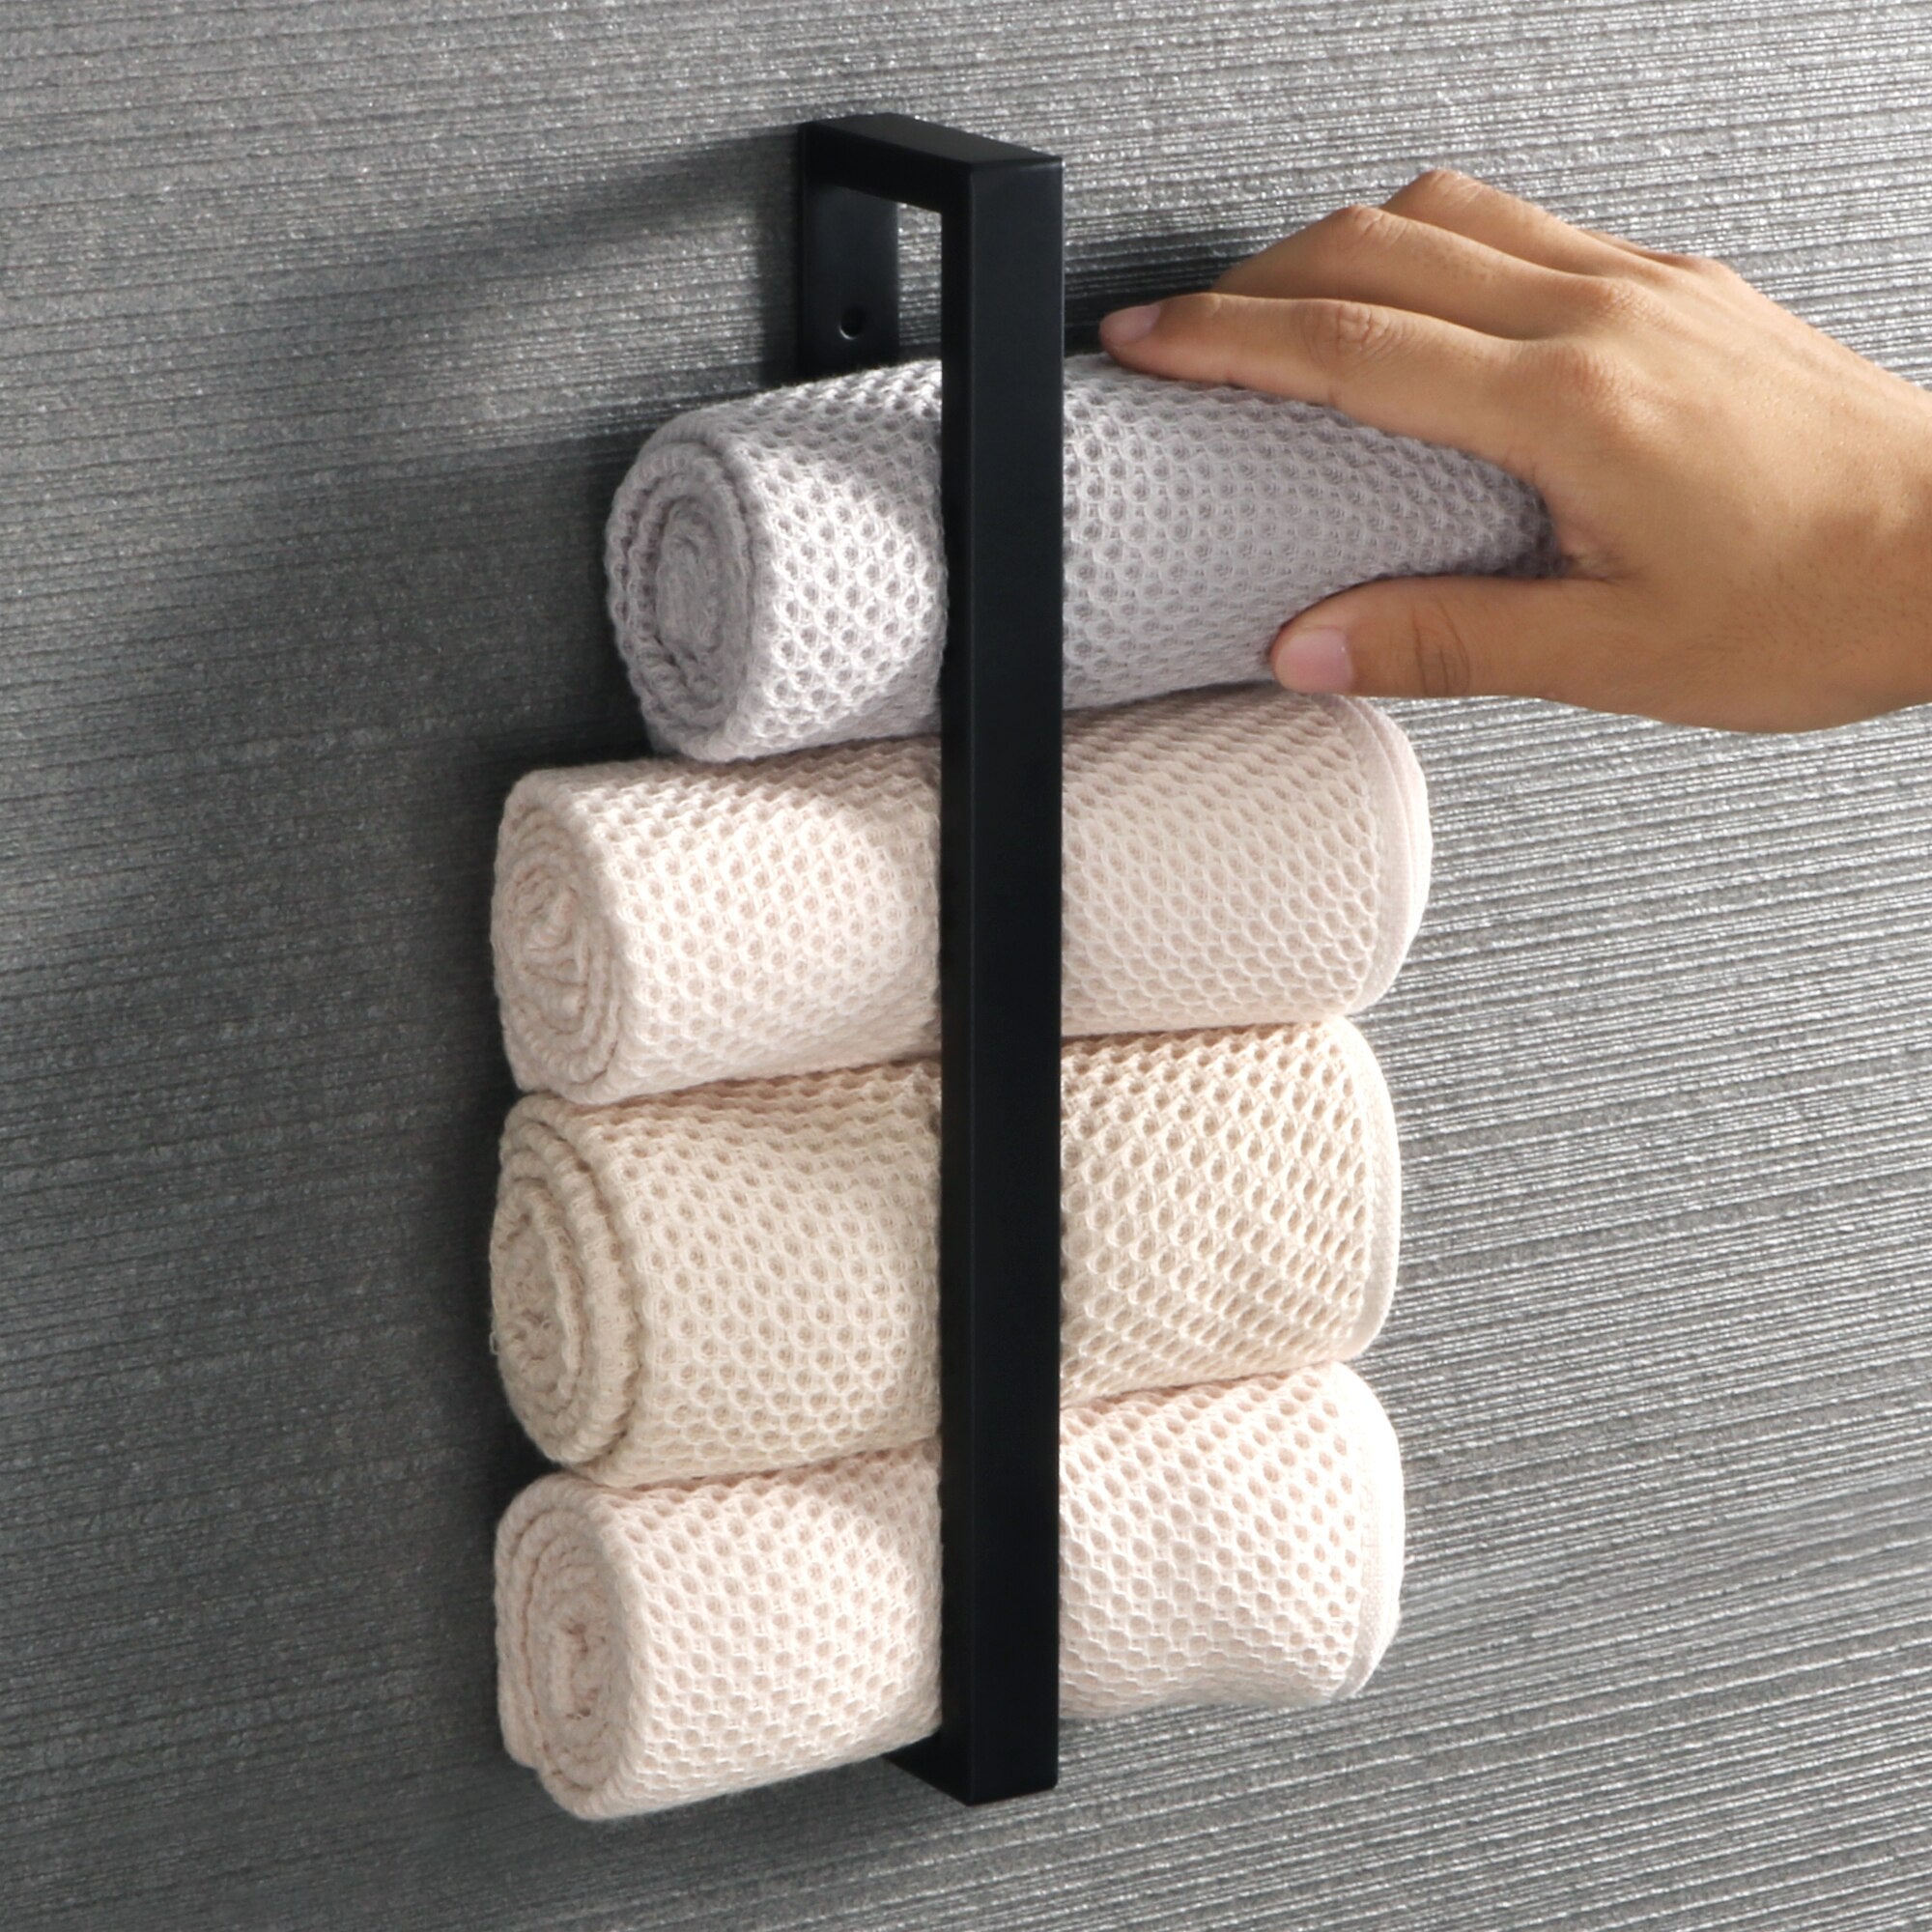 Minimalist Black Stainless Steel Bathroom Towel Rack Wall Mounted Hanger For Towel Organizer For Storage Of Multiple Towel Rolls